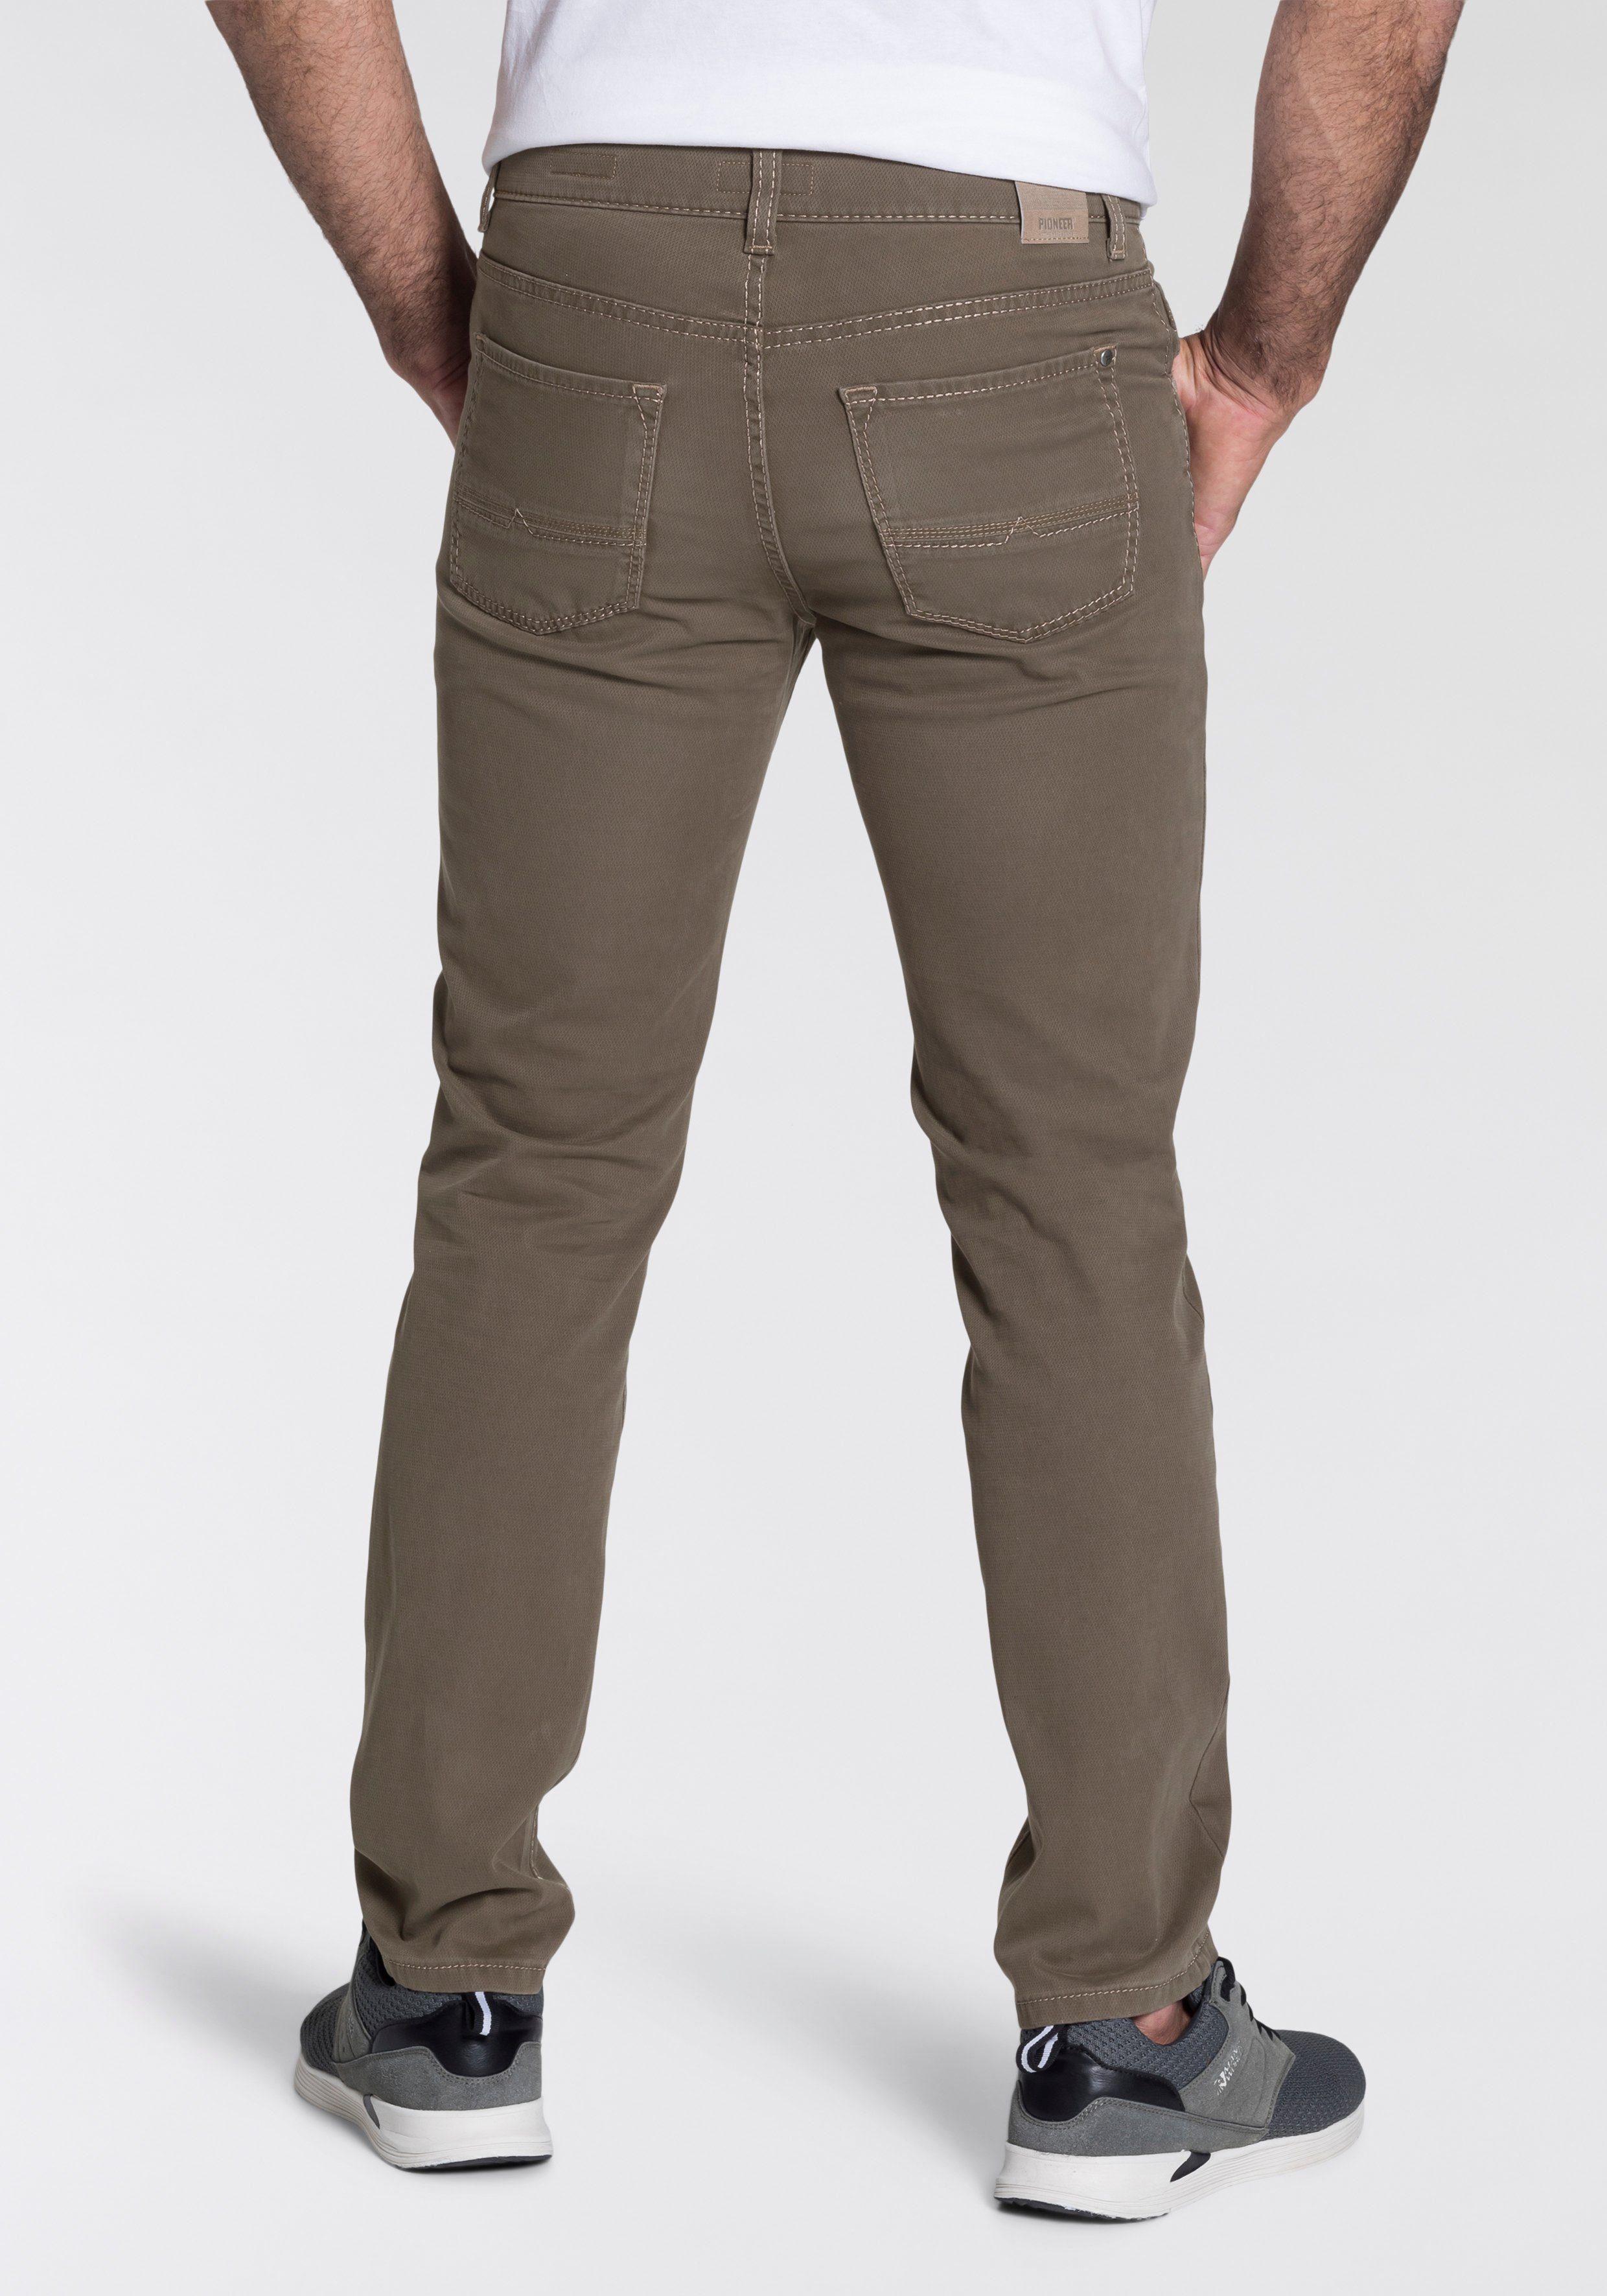 Rando Jeans Pioneer Authentic taupe 5-Pocket-Hose deep